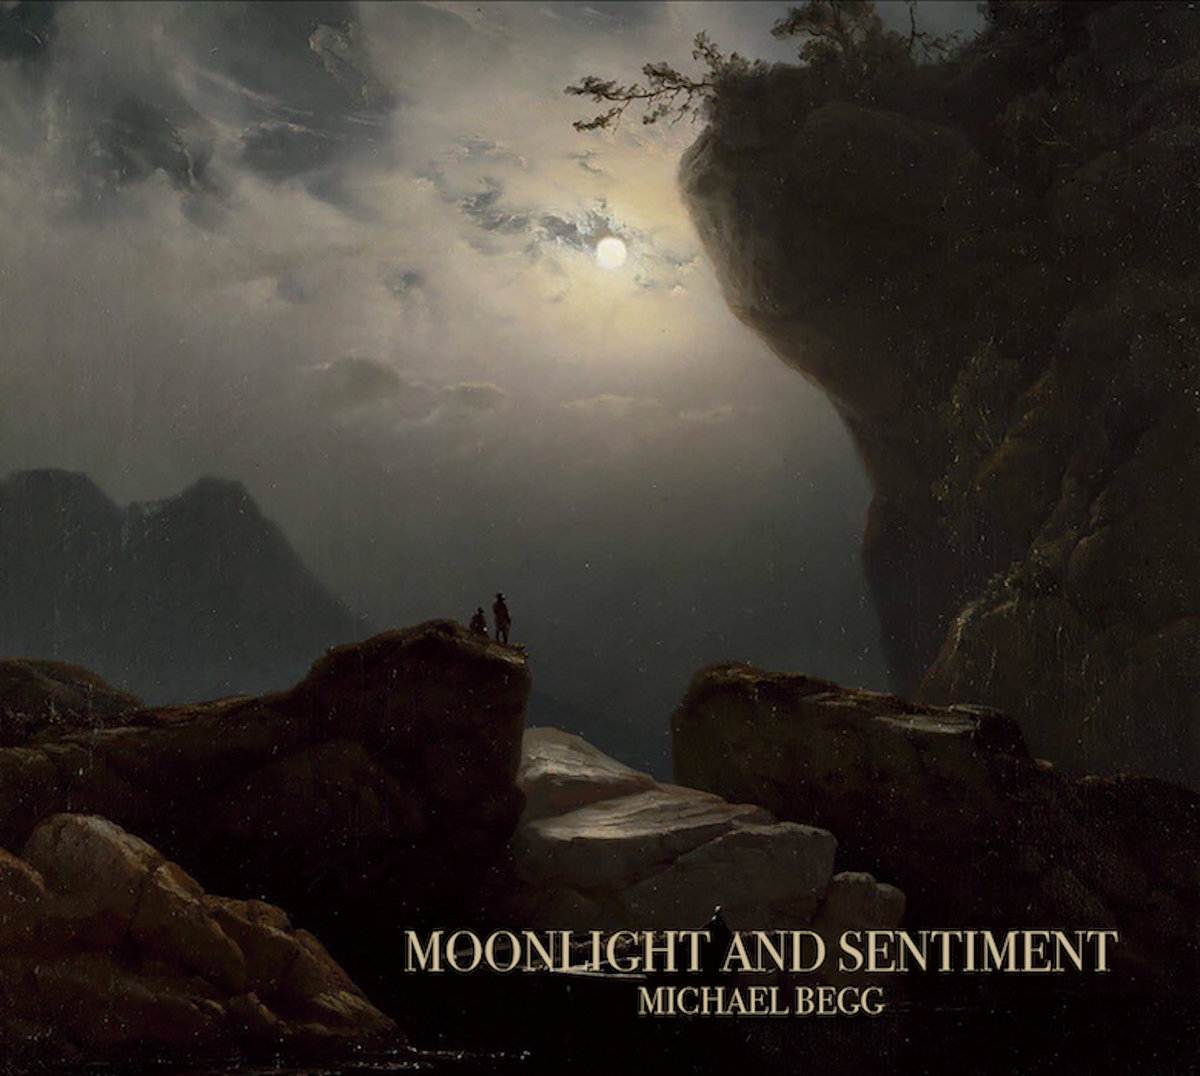 Michael Begg – Moonlight and Sentiment